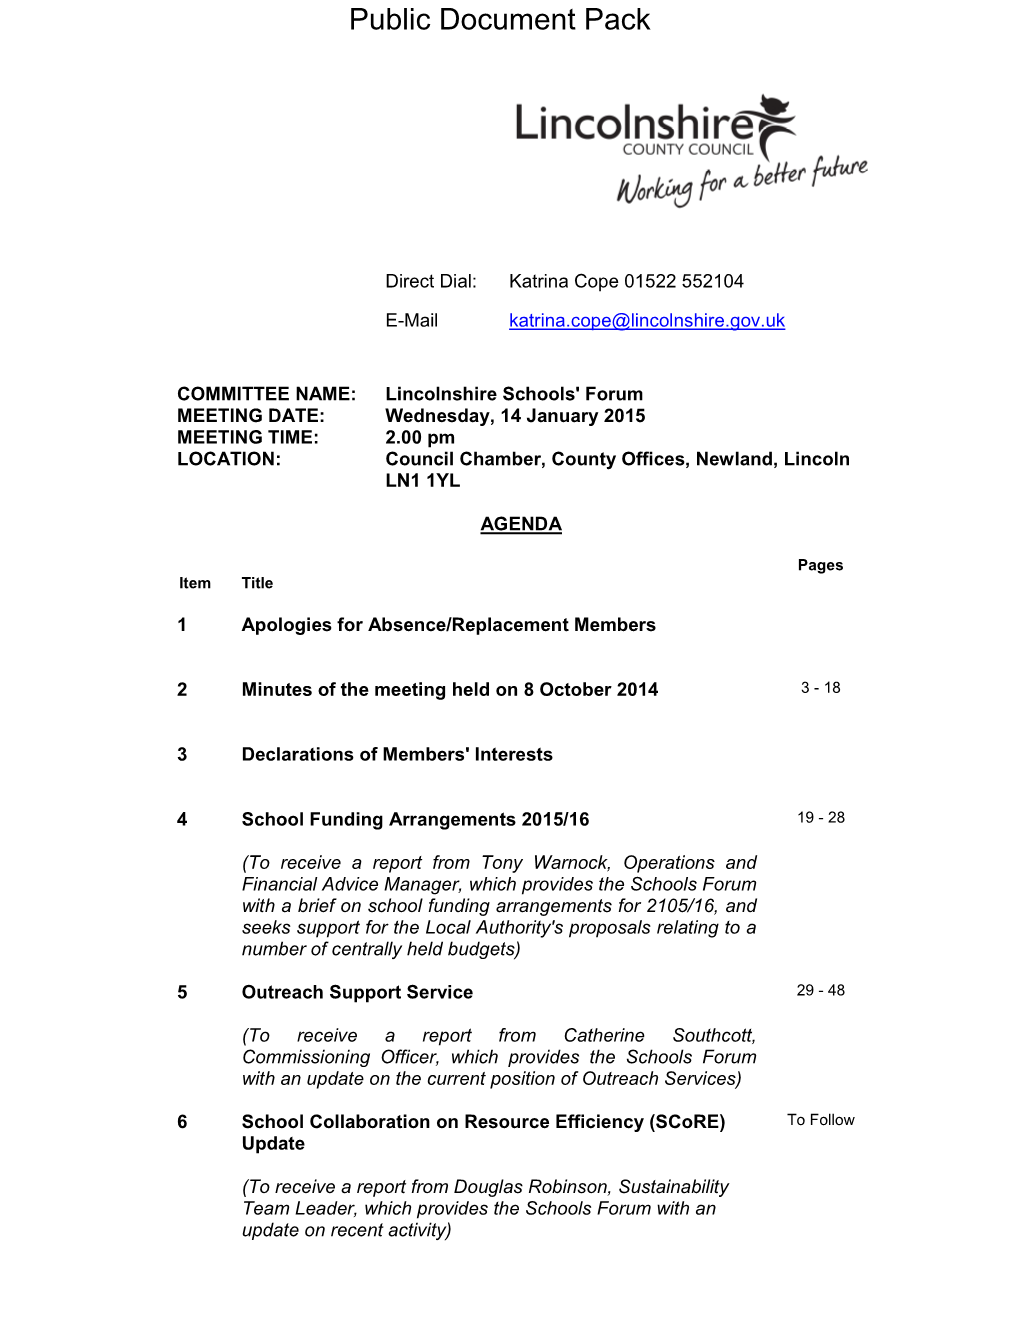 (Public Pack)Agenda Document for Lincolnshire Schools' Forum, 14/01